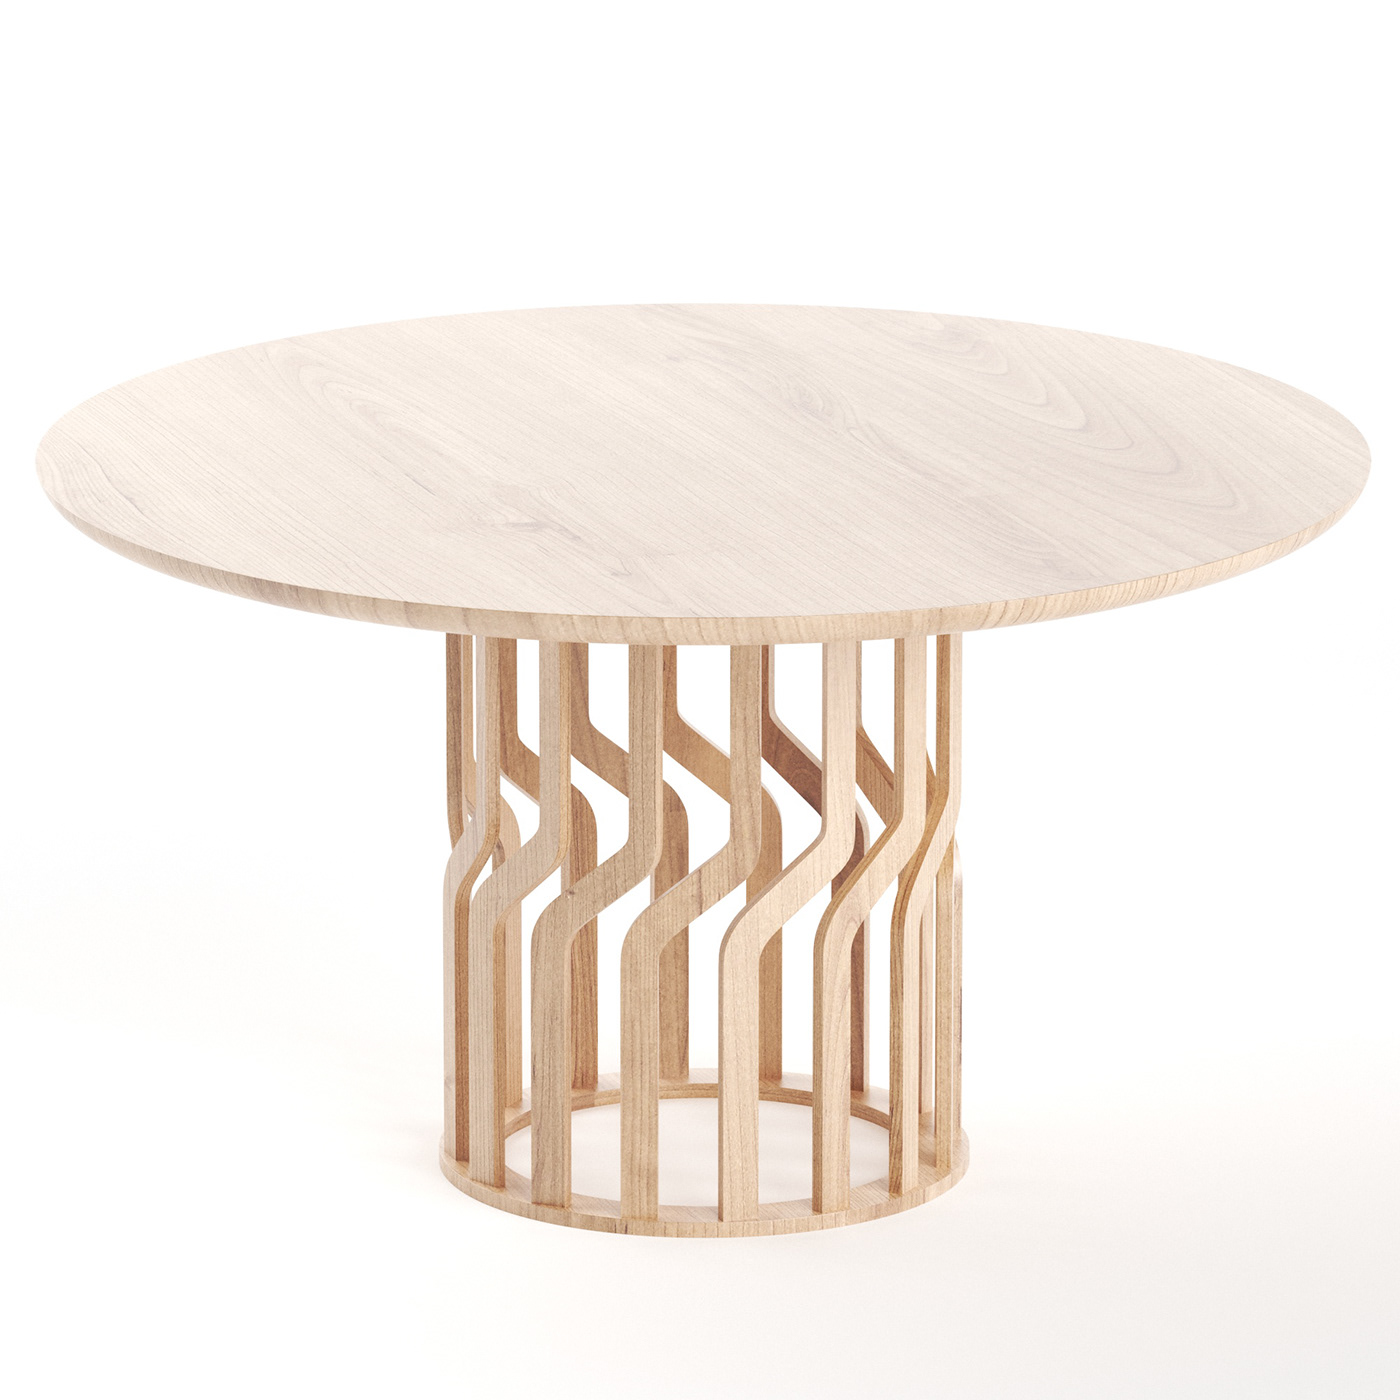 3D 3ds max furniture furniture design  Interior modern professional table vray